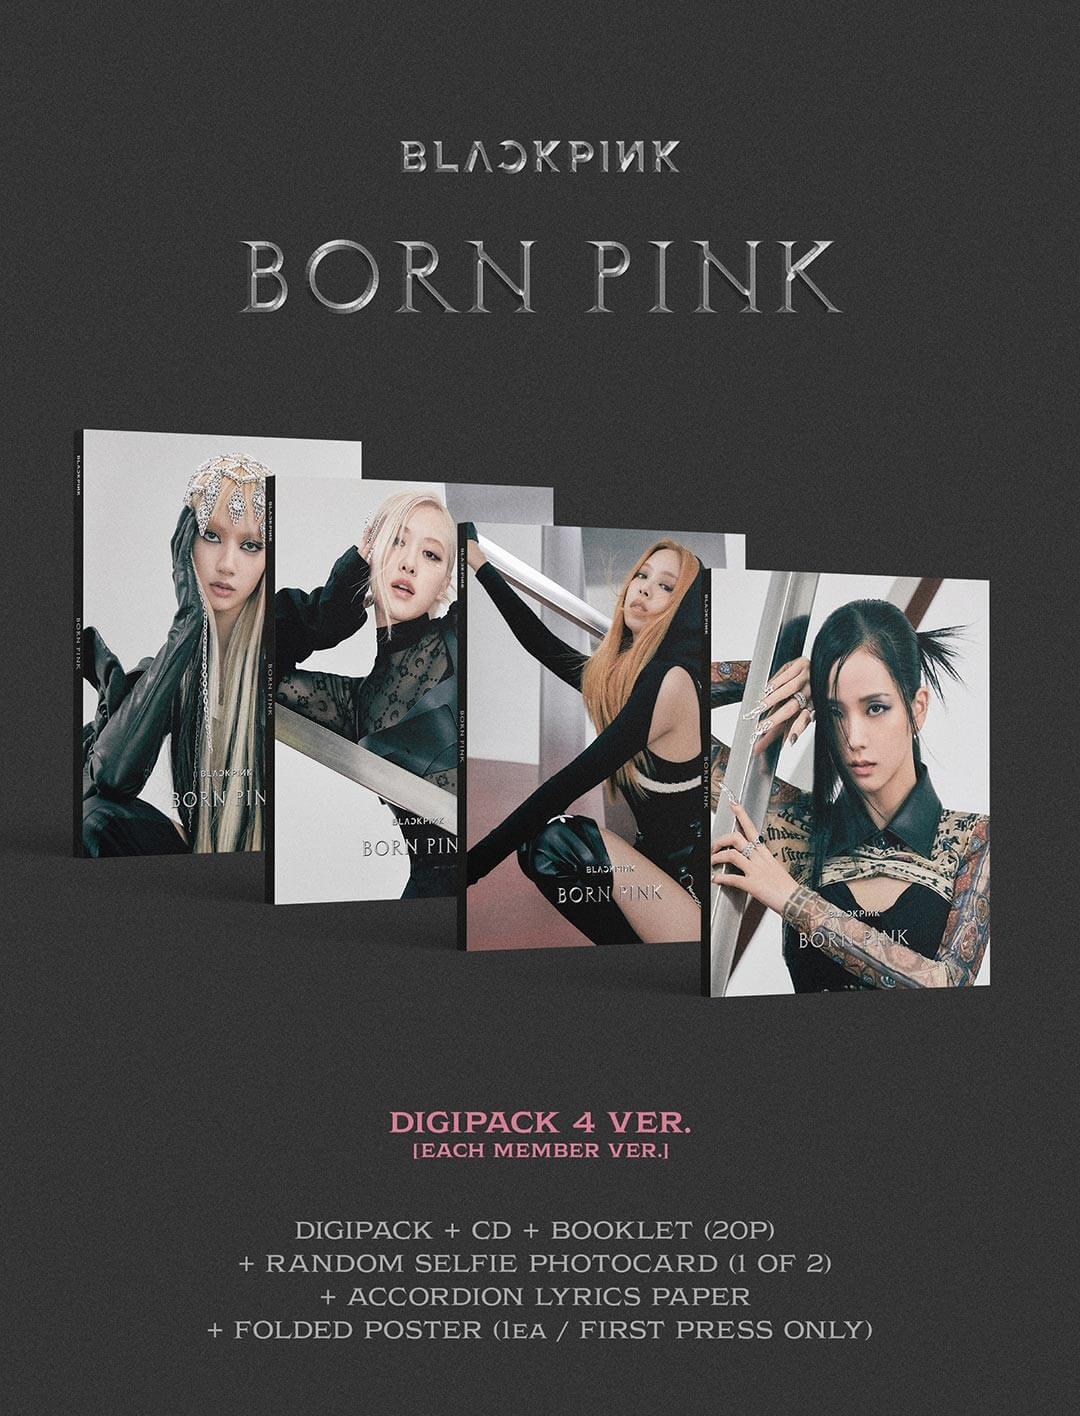 BLACKPINK BORN PINK Digipack Version Album Info